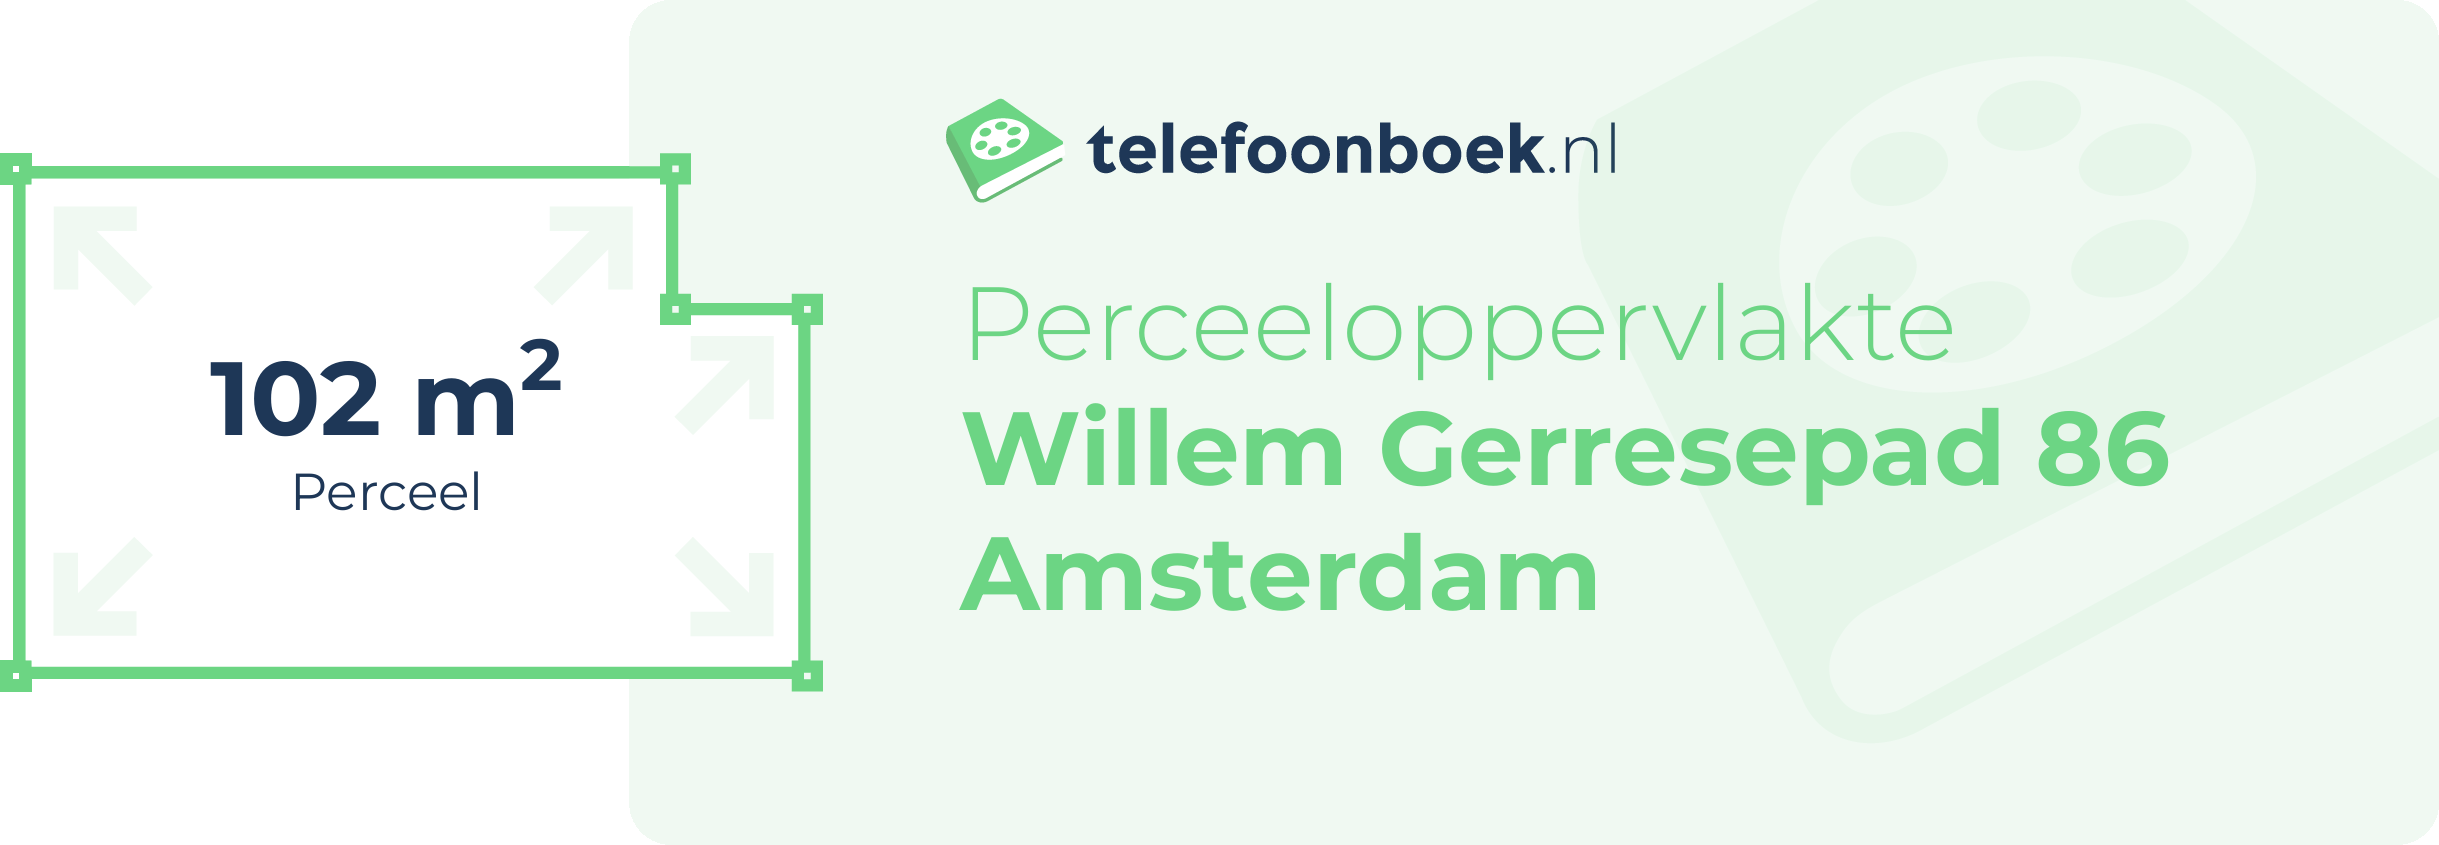 Perceeloppervlakte Willem Gerresepad 86 Amsterdam